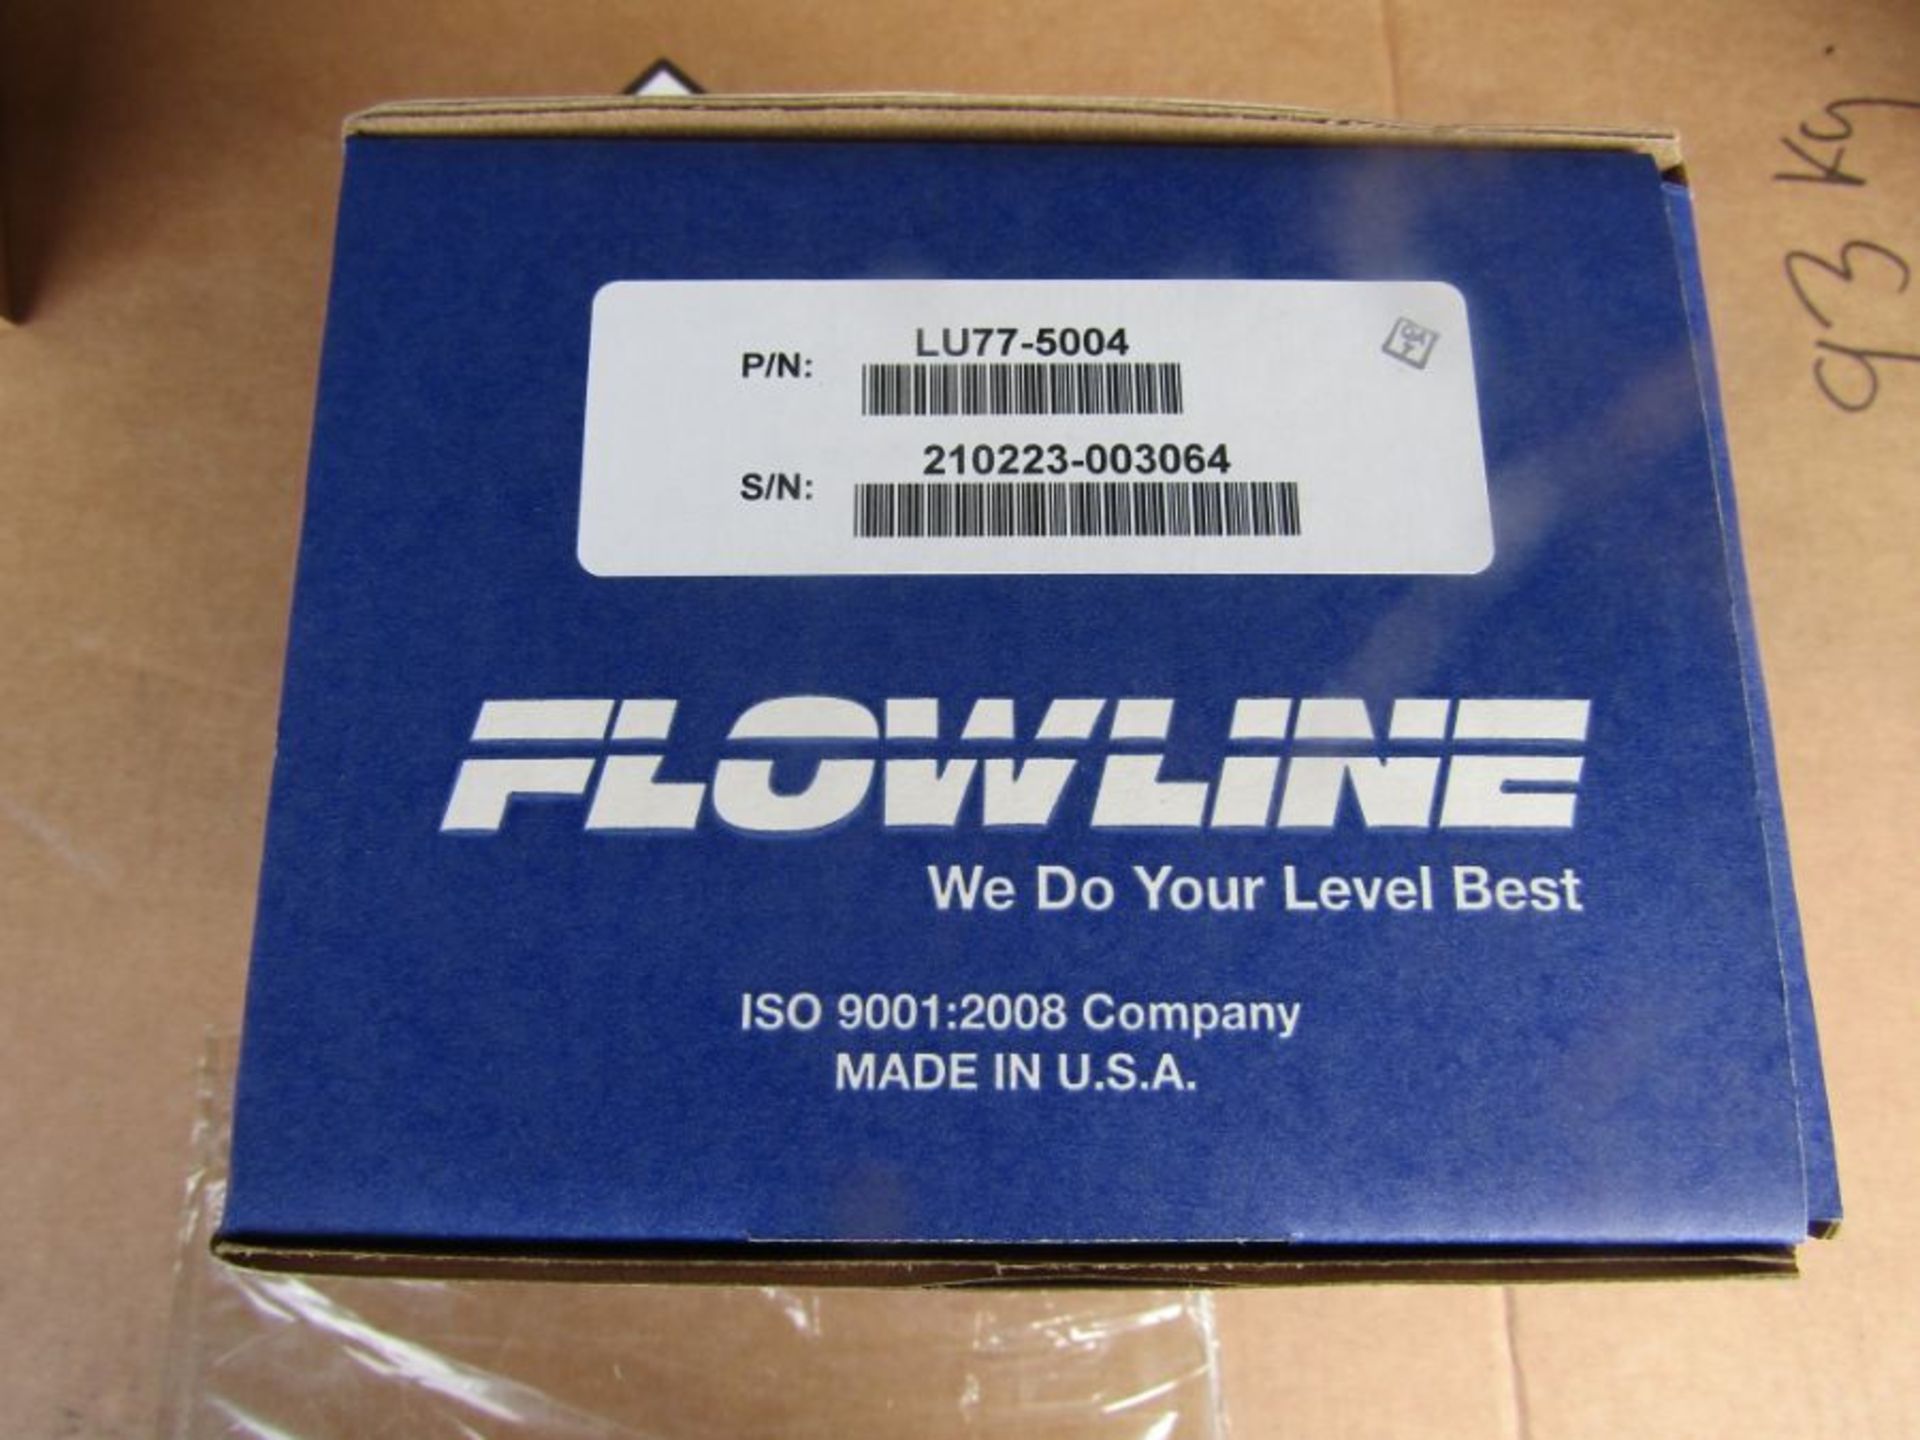 Flowline EchoSwitch Ultrasonic Level Switch Sensor, Vertical LU77-5004 TM 1240130 - Image 2 of 3